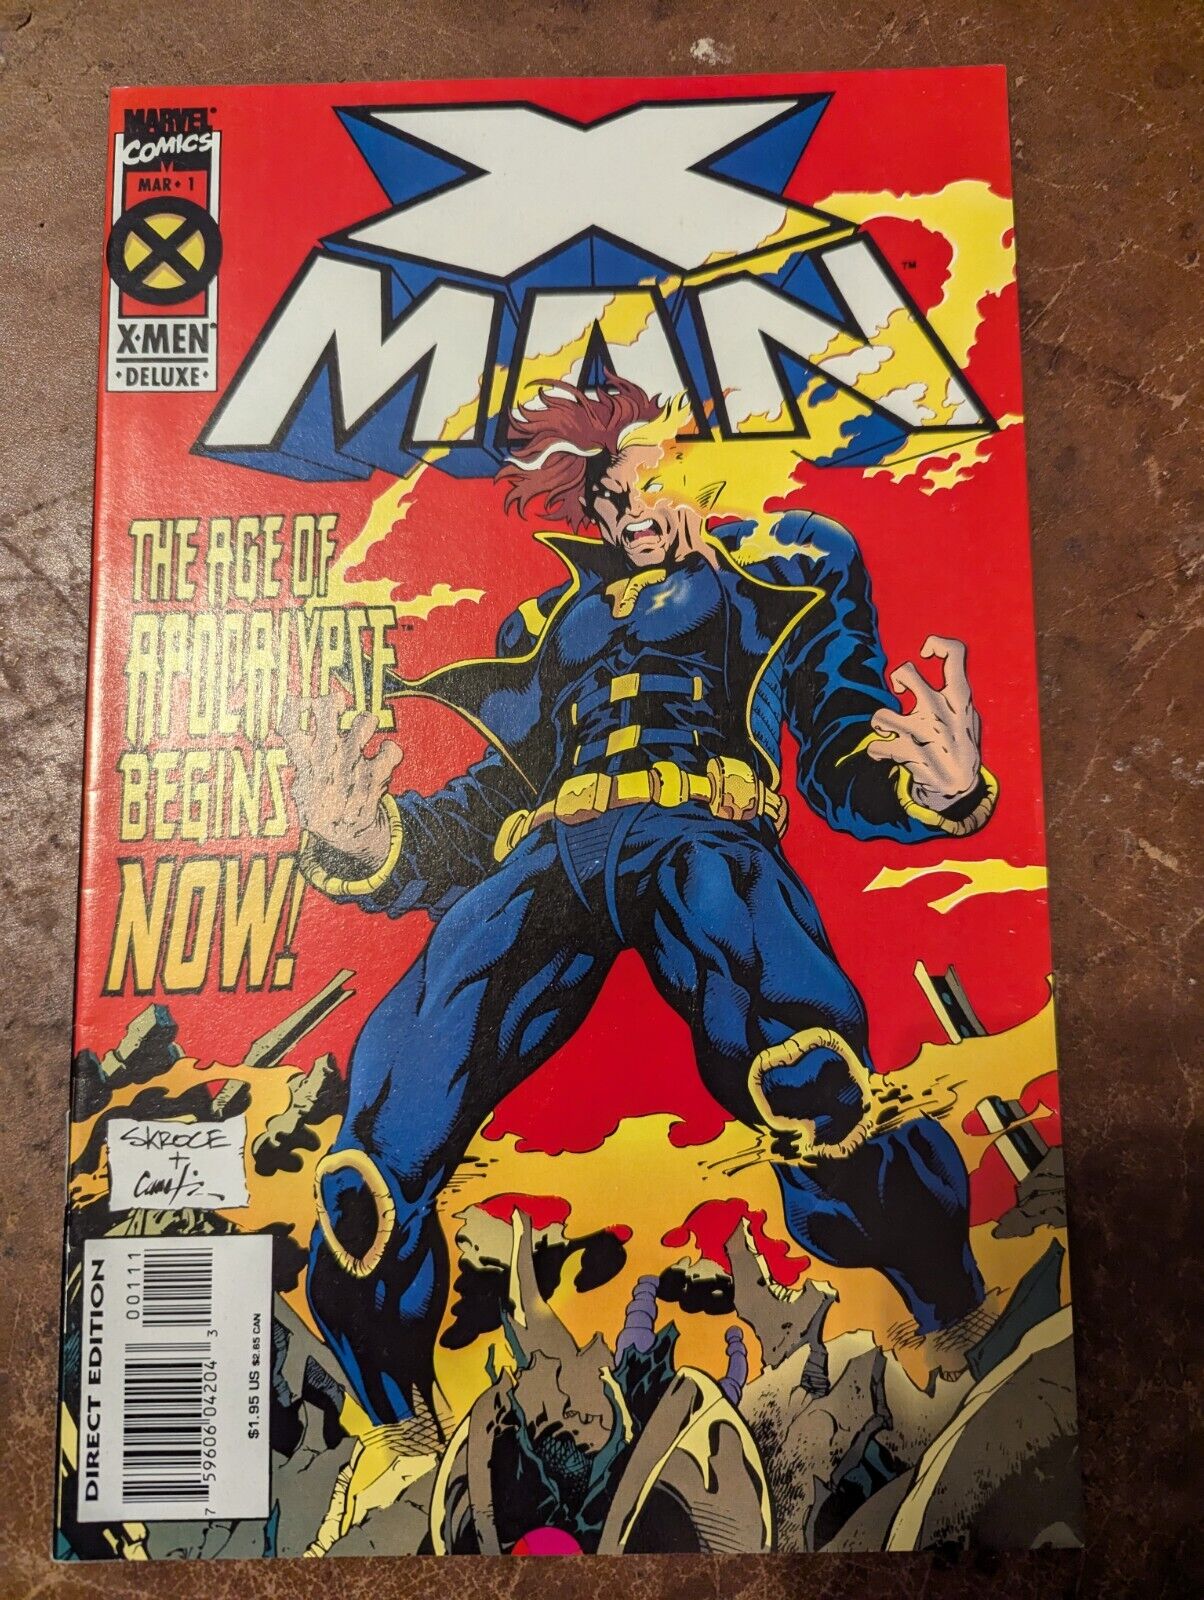 X-Man #1 (Marvel Comics March 1995)